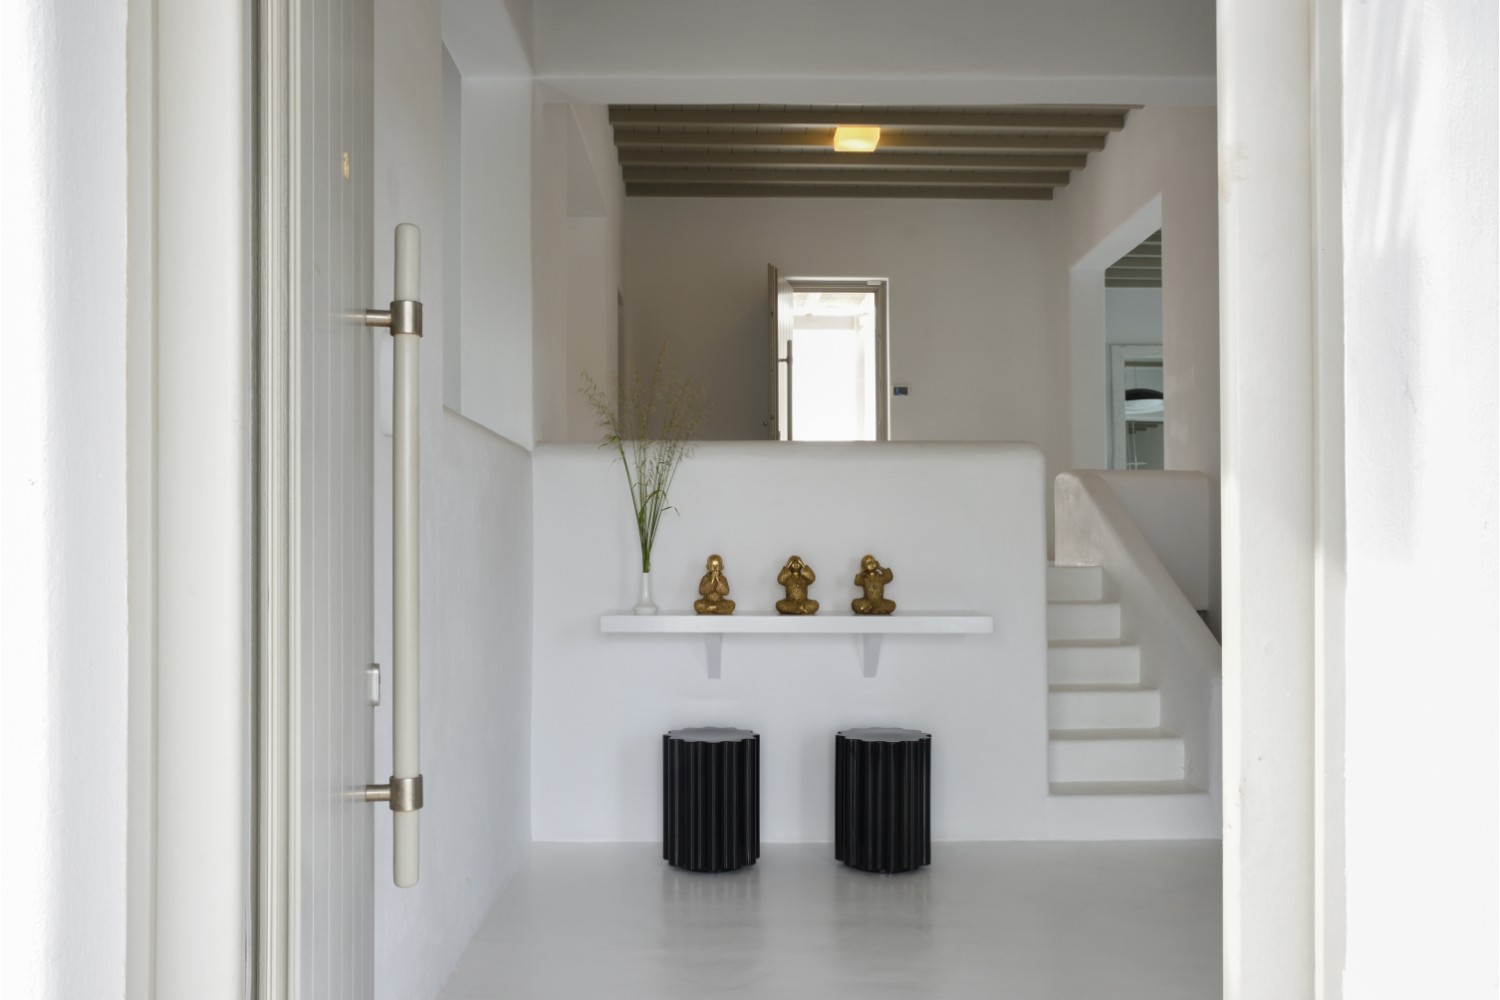 Amalgam Homes Dafni villa, Mykonos island: image interior gallery